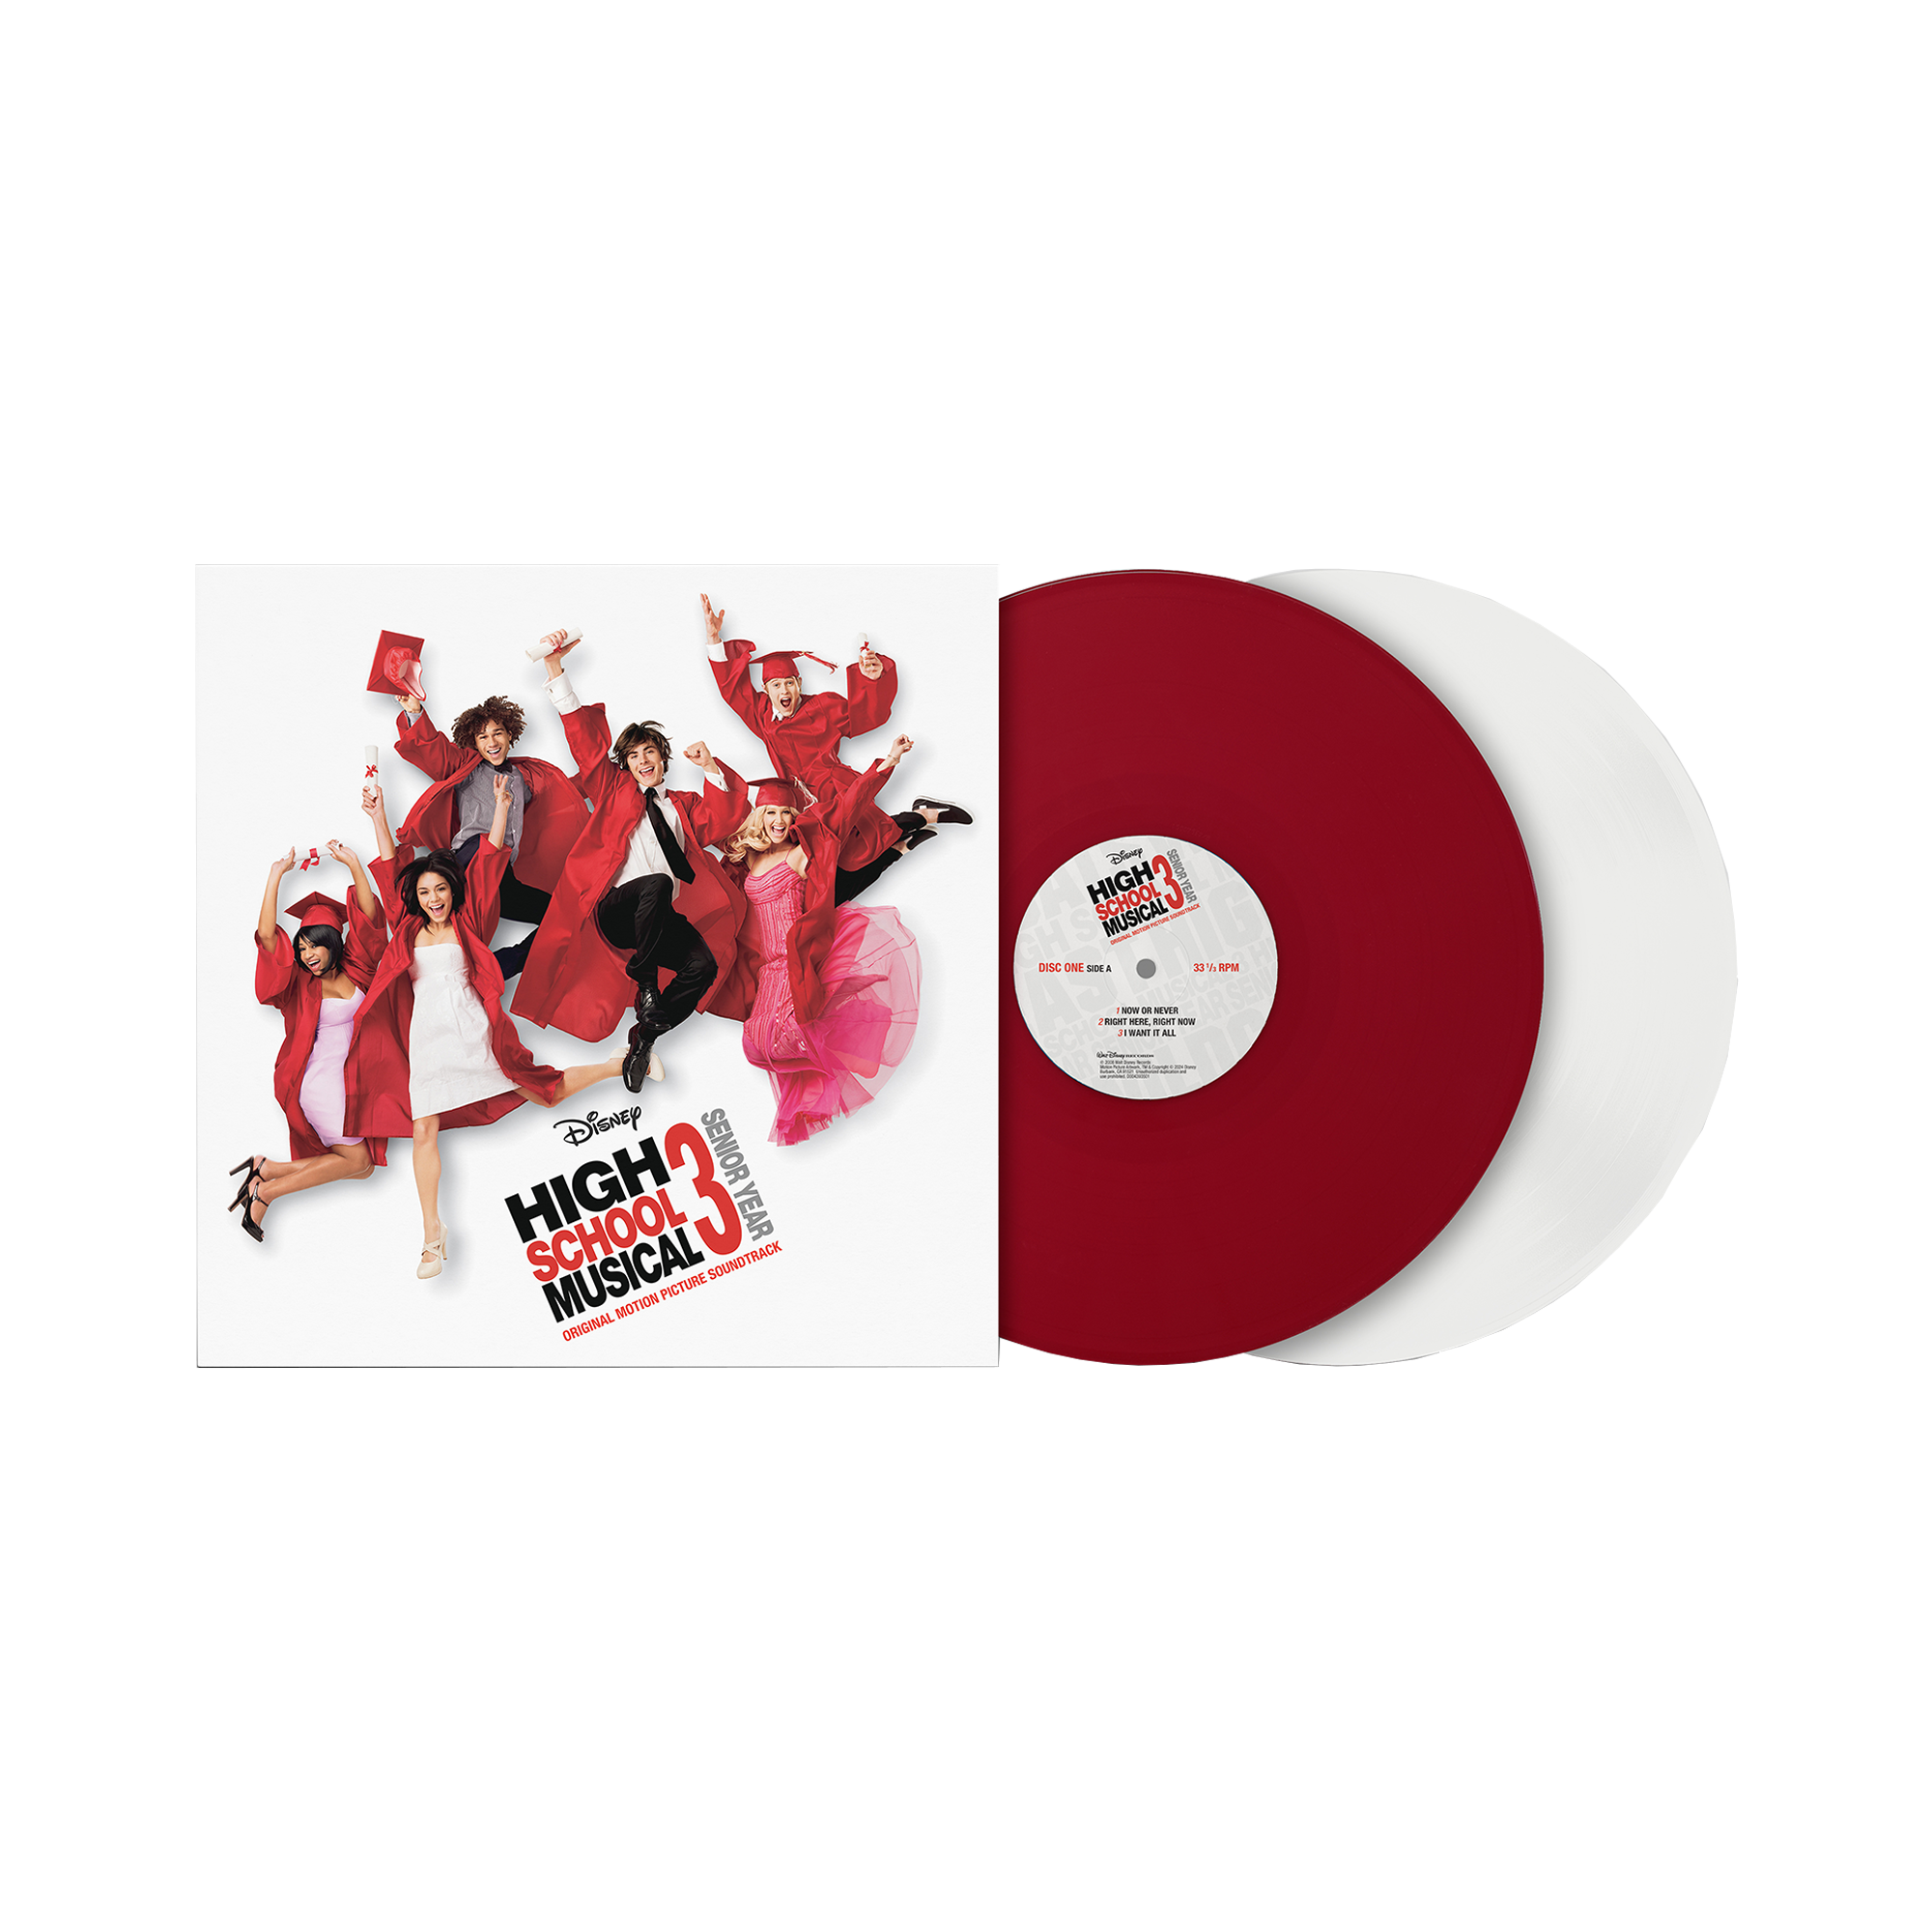 High School Musical Cast, Disney - High School Musical 3 - Senior Year: Red and White Vinyl 2LP